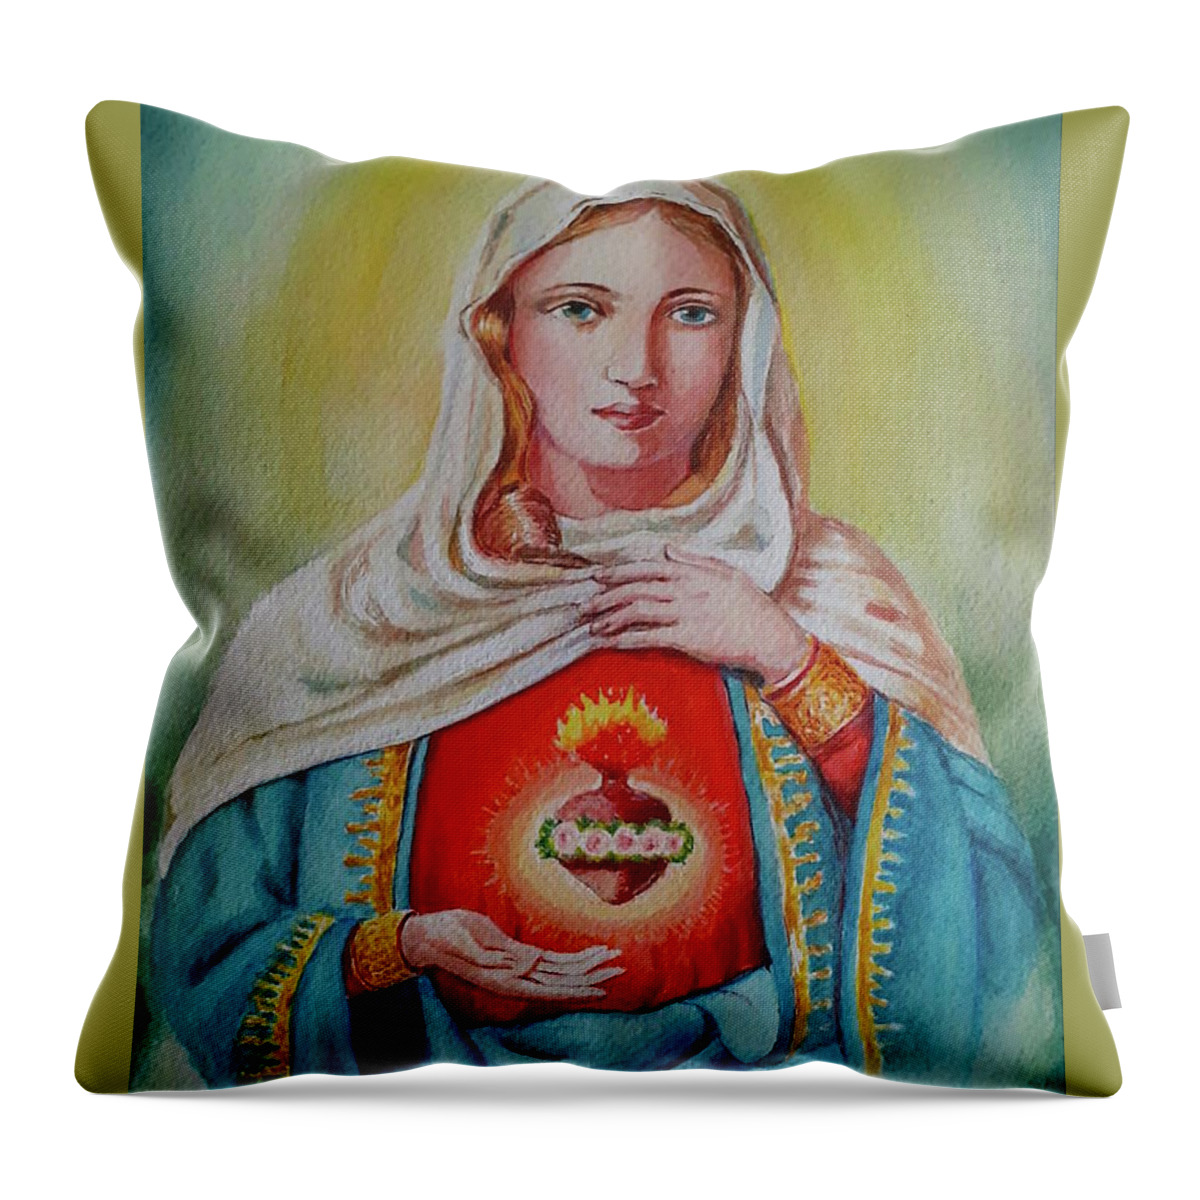 Saint Mary Throw Pillow featuring the painting Saint Mary s sacred heart by Carolina Prieto Moreno